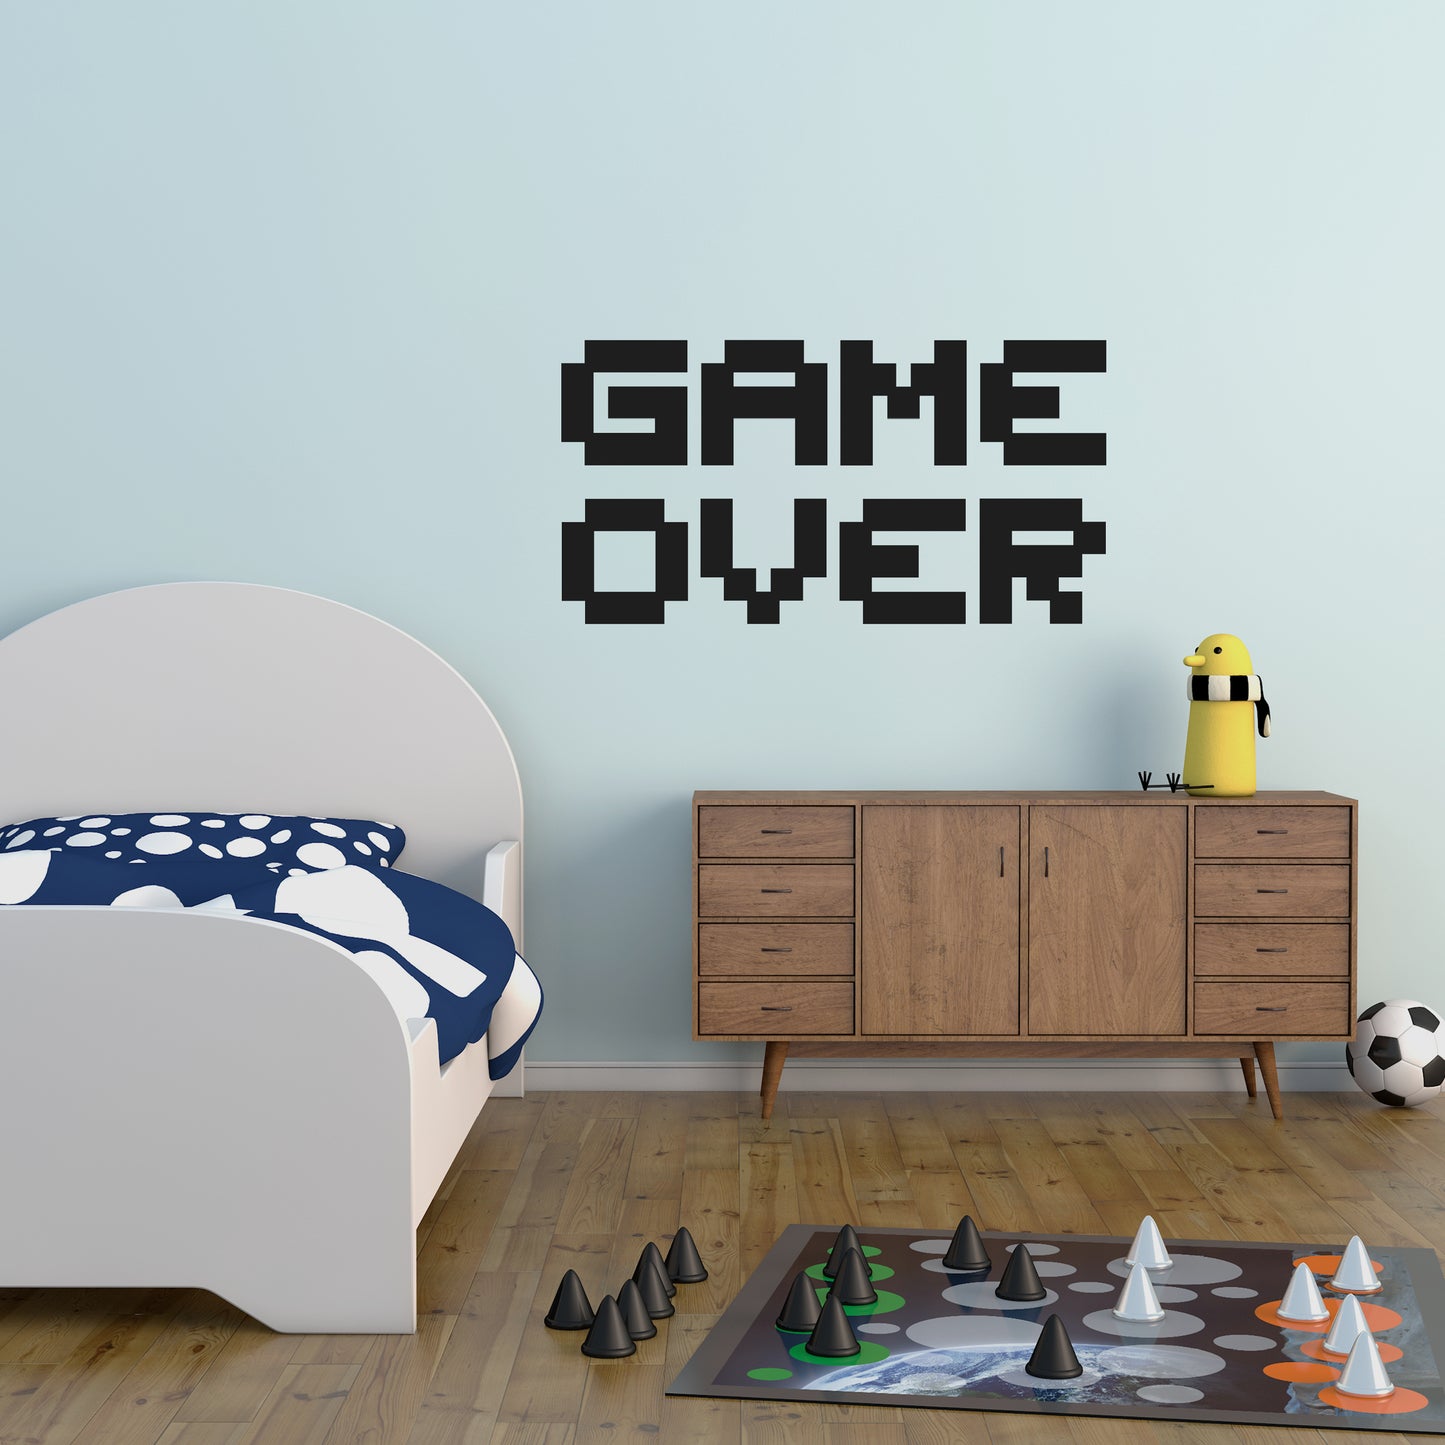 Game over - Gamer decal vinyl sticker